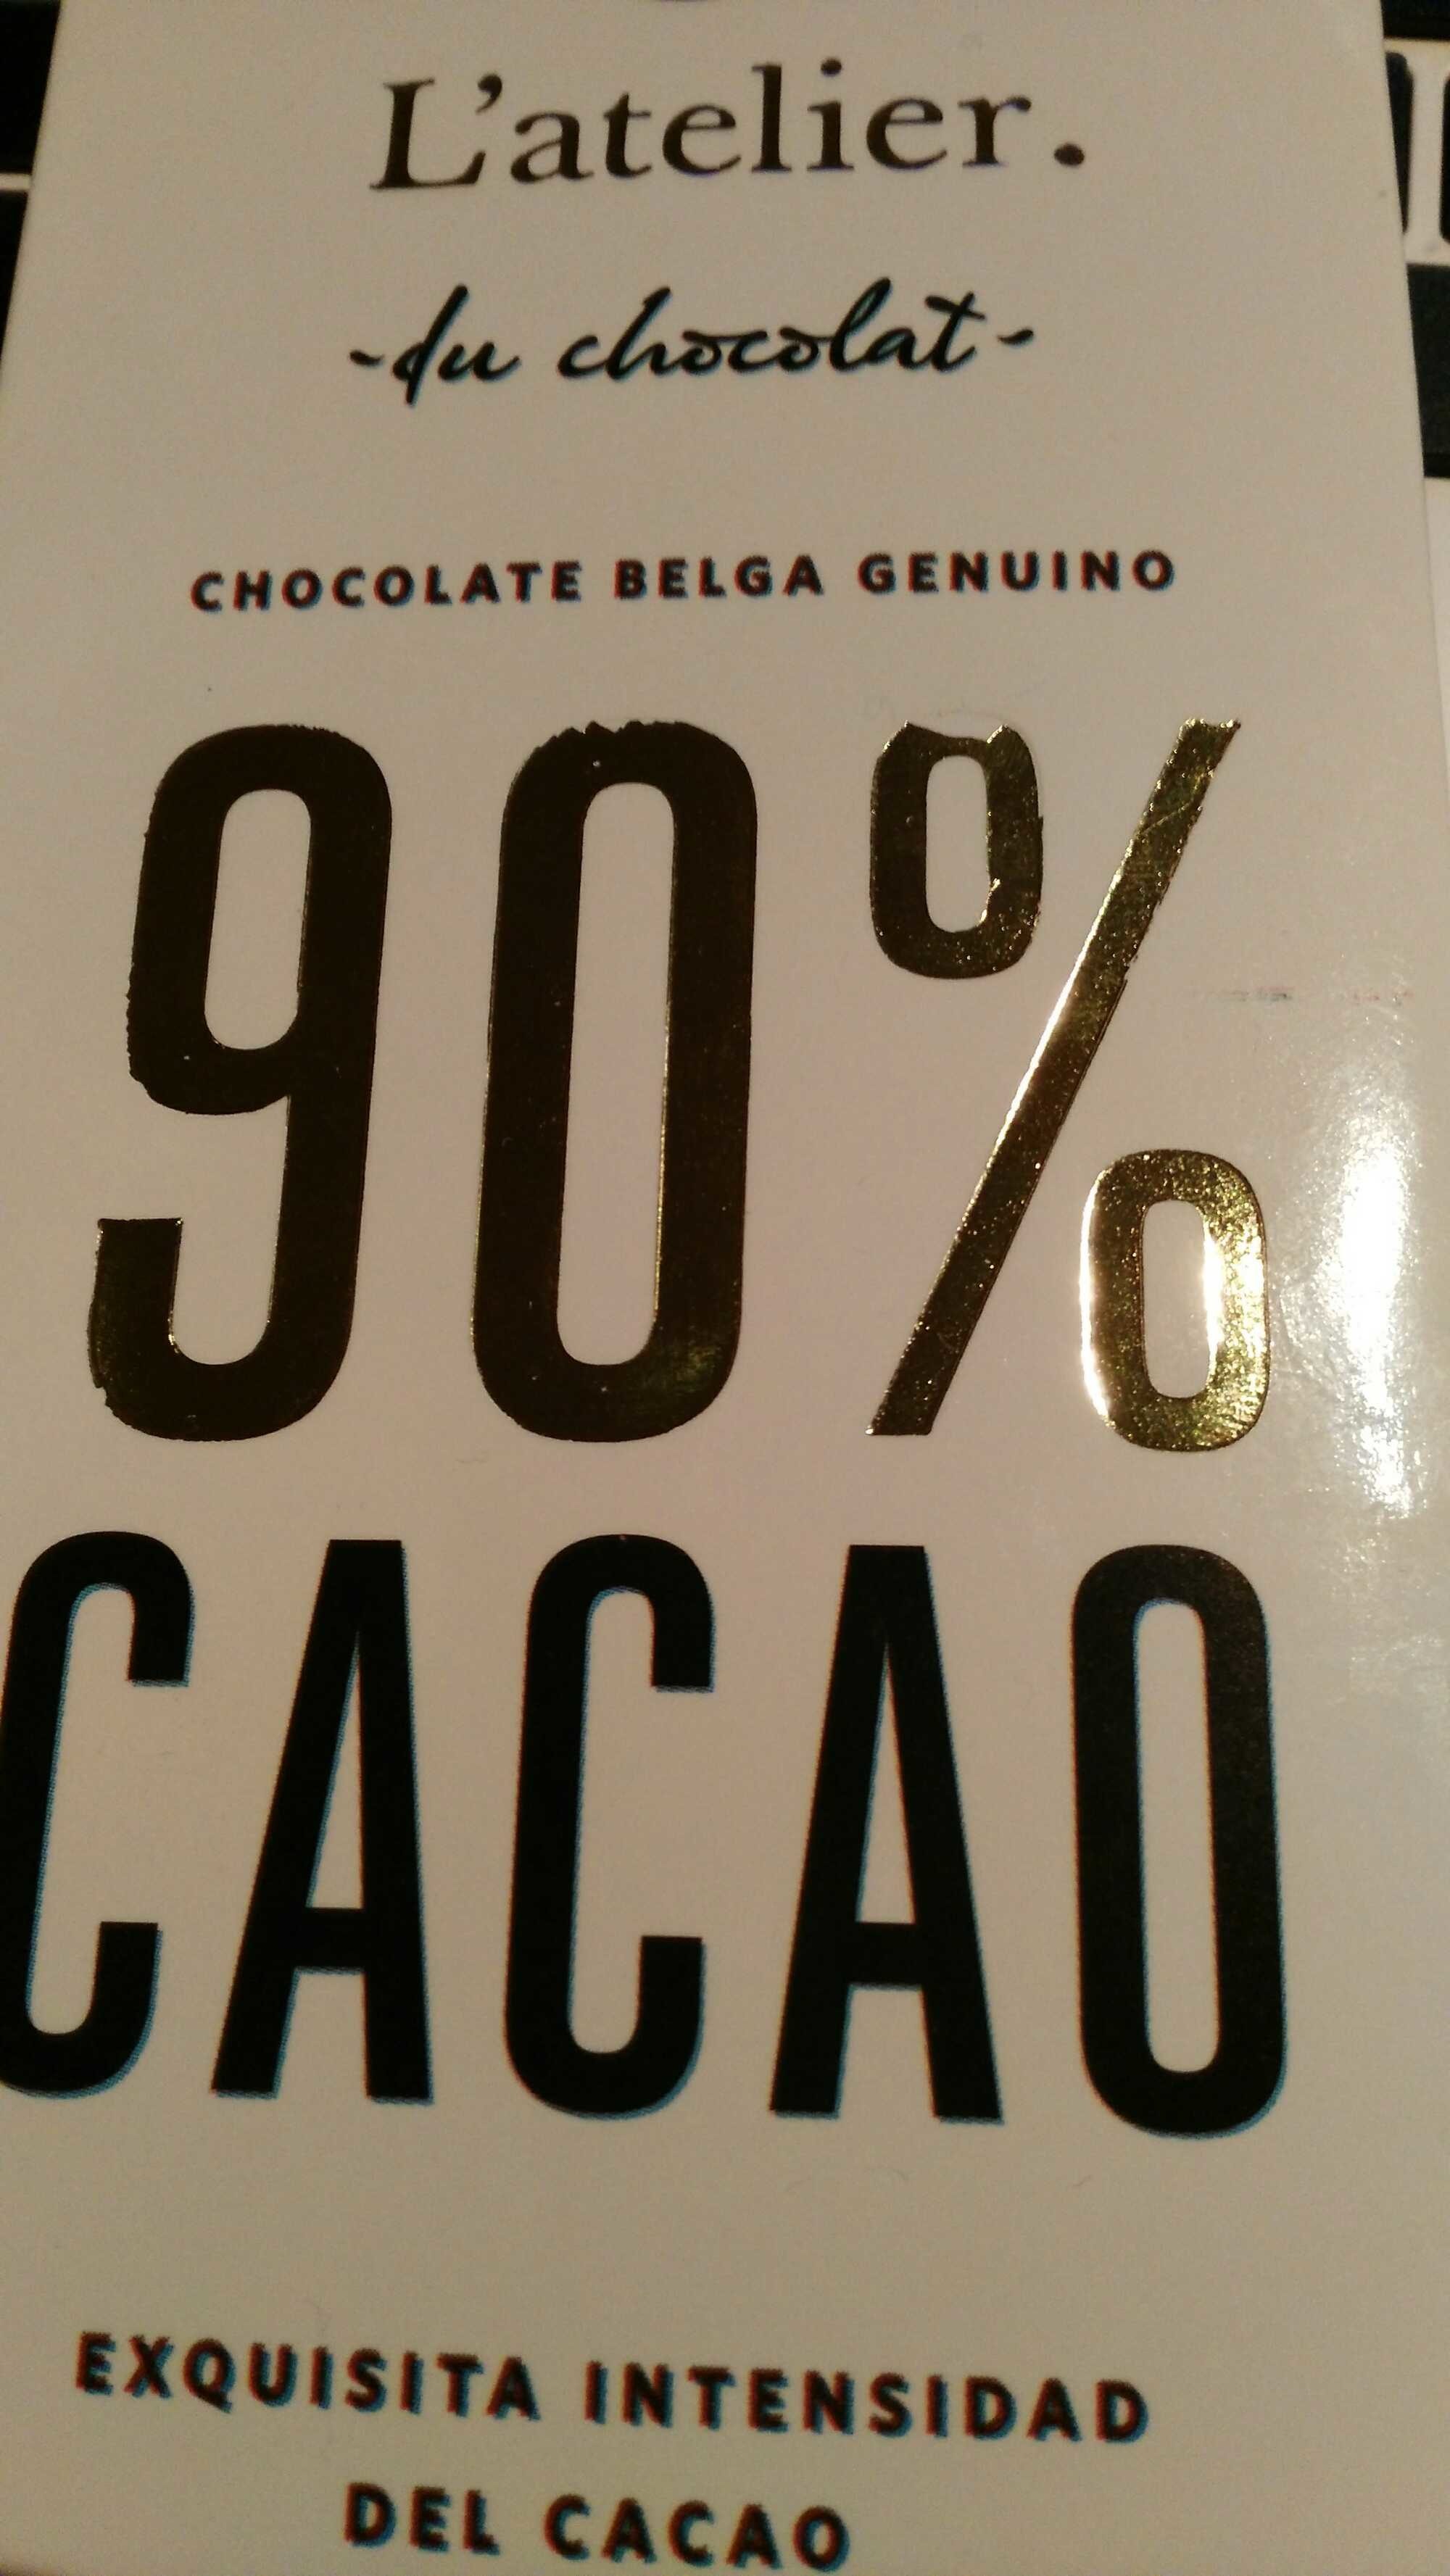 Chocolate Belga genuino 90℅ cacao - Product - es